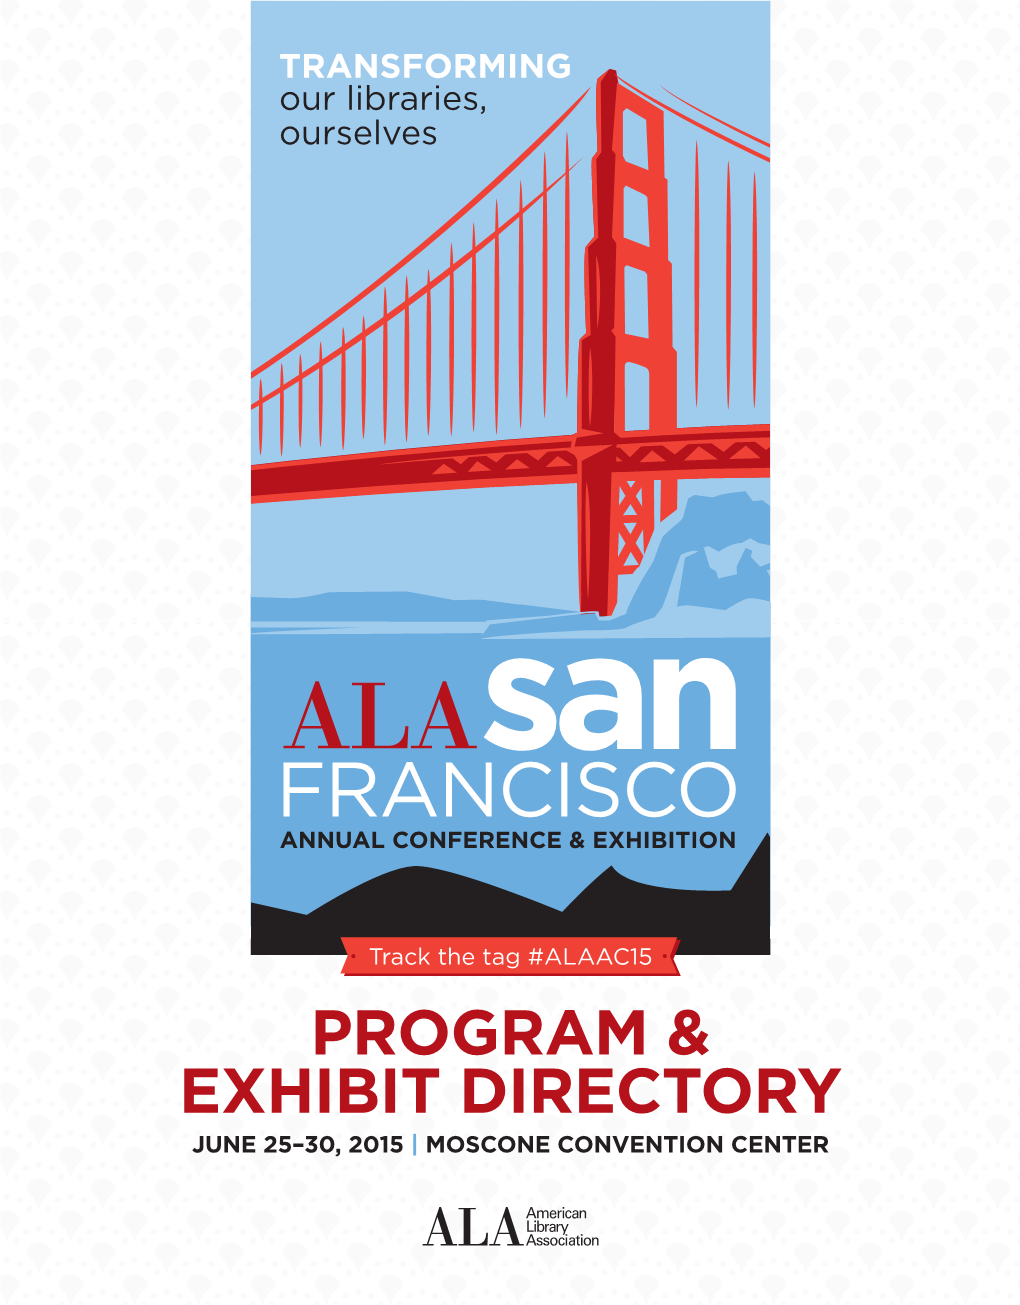 Program & Exhibit Directory